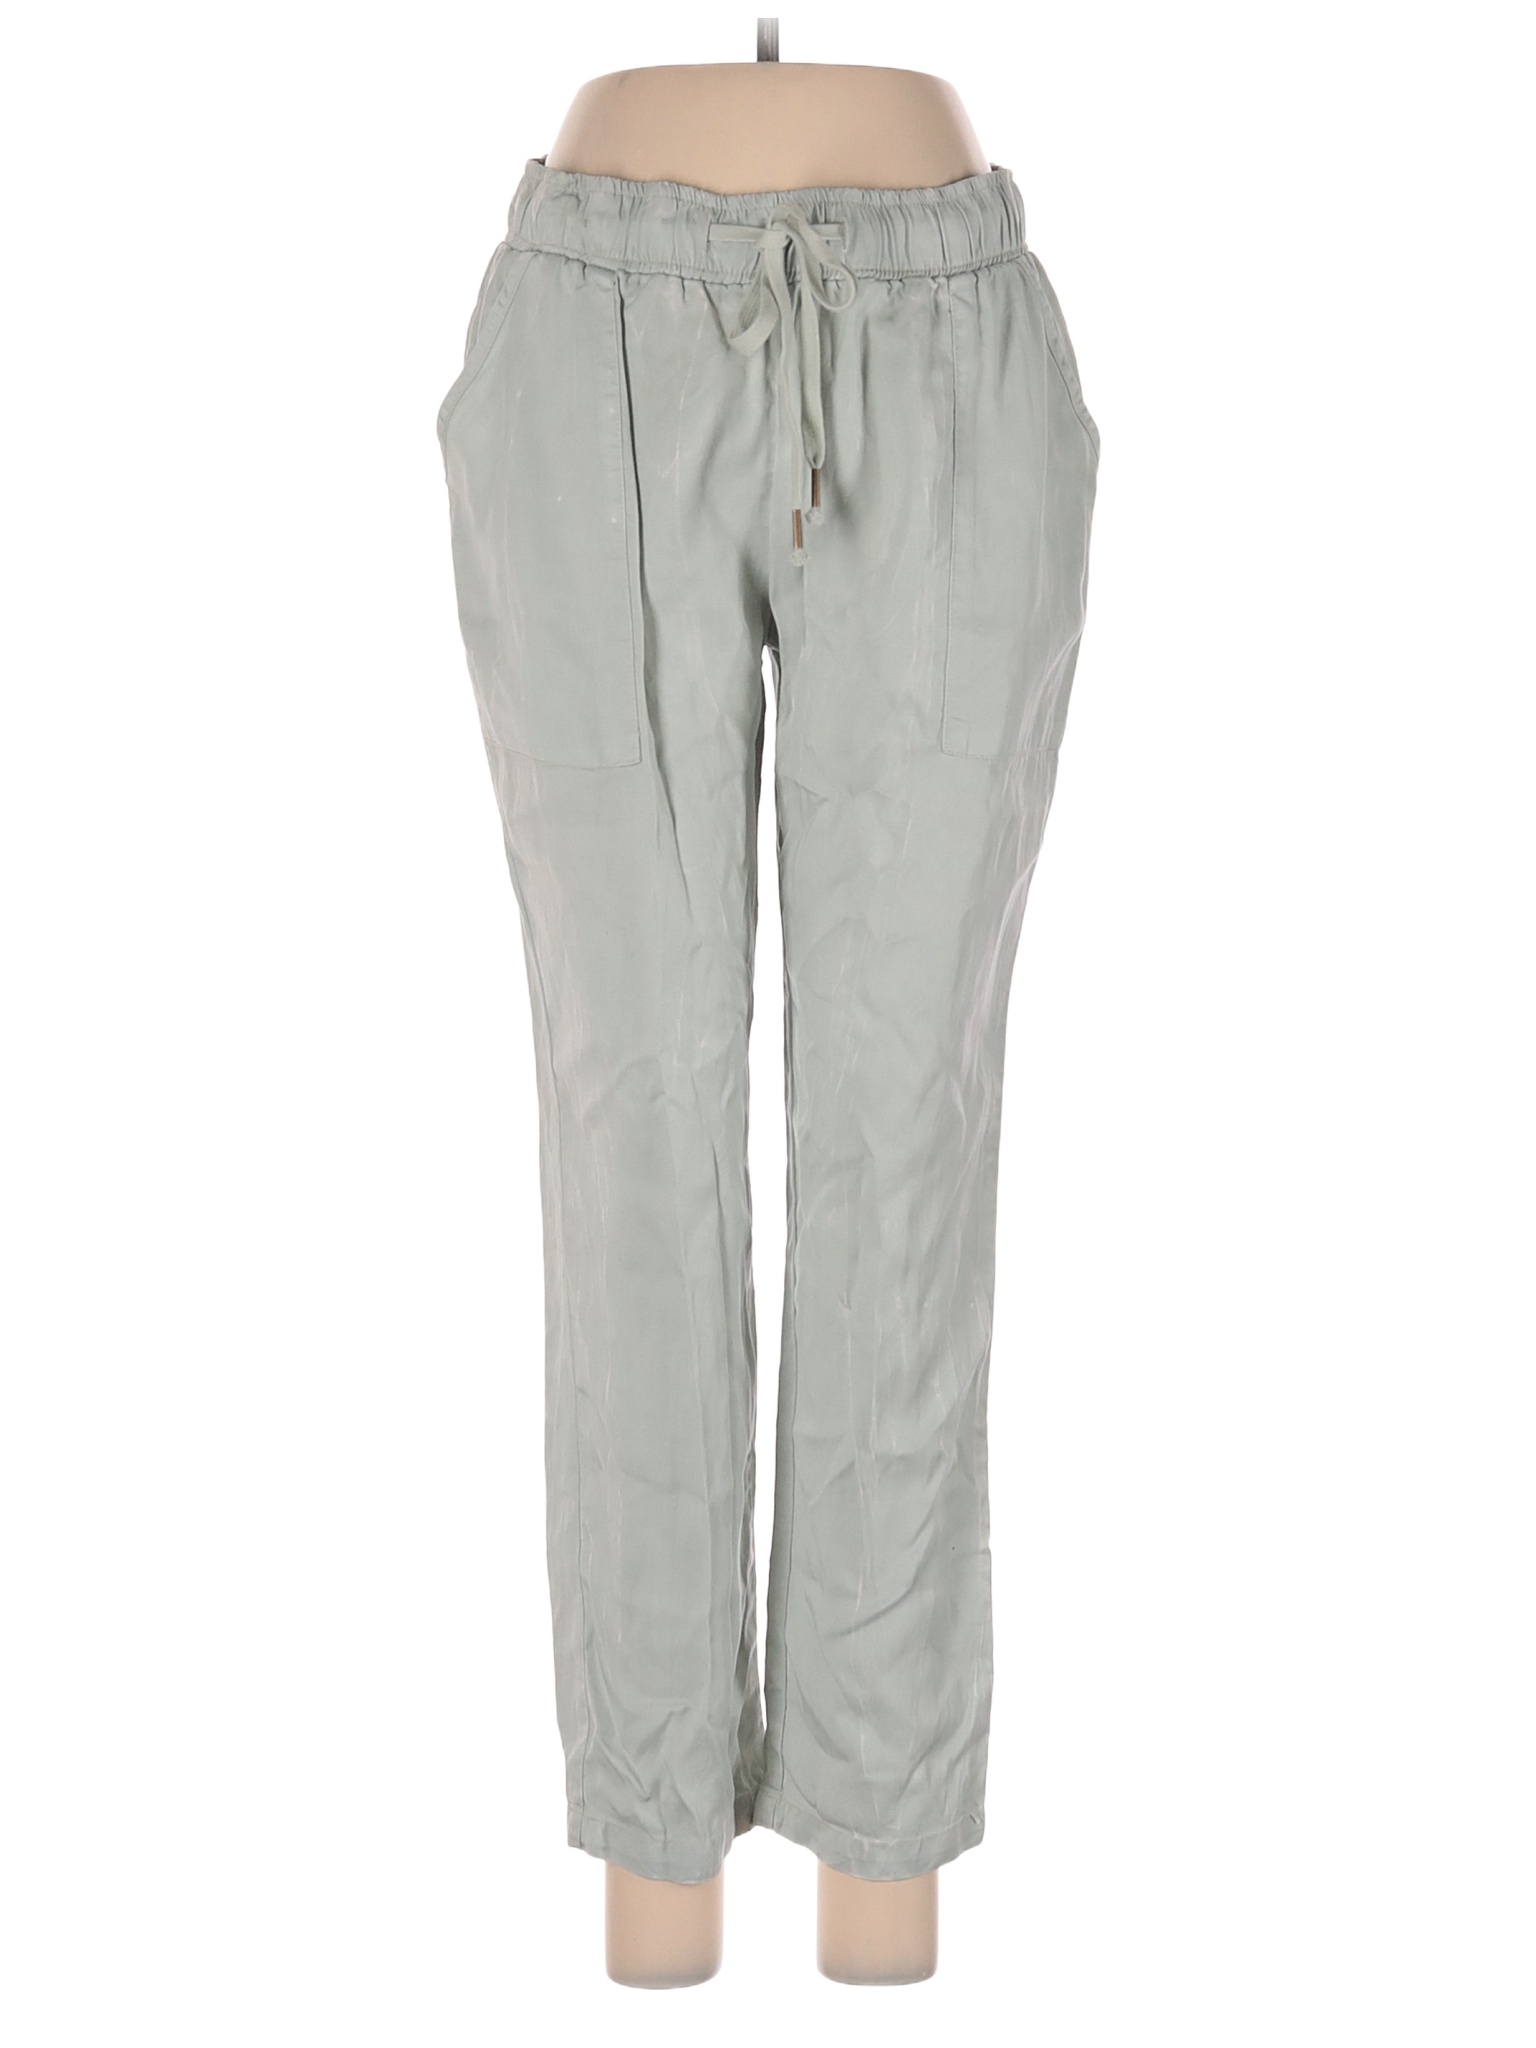 Young Fabulous & Broke 100% Tencel Solid Gray Green Casual Pants Size S ...